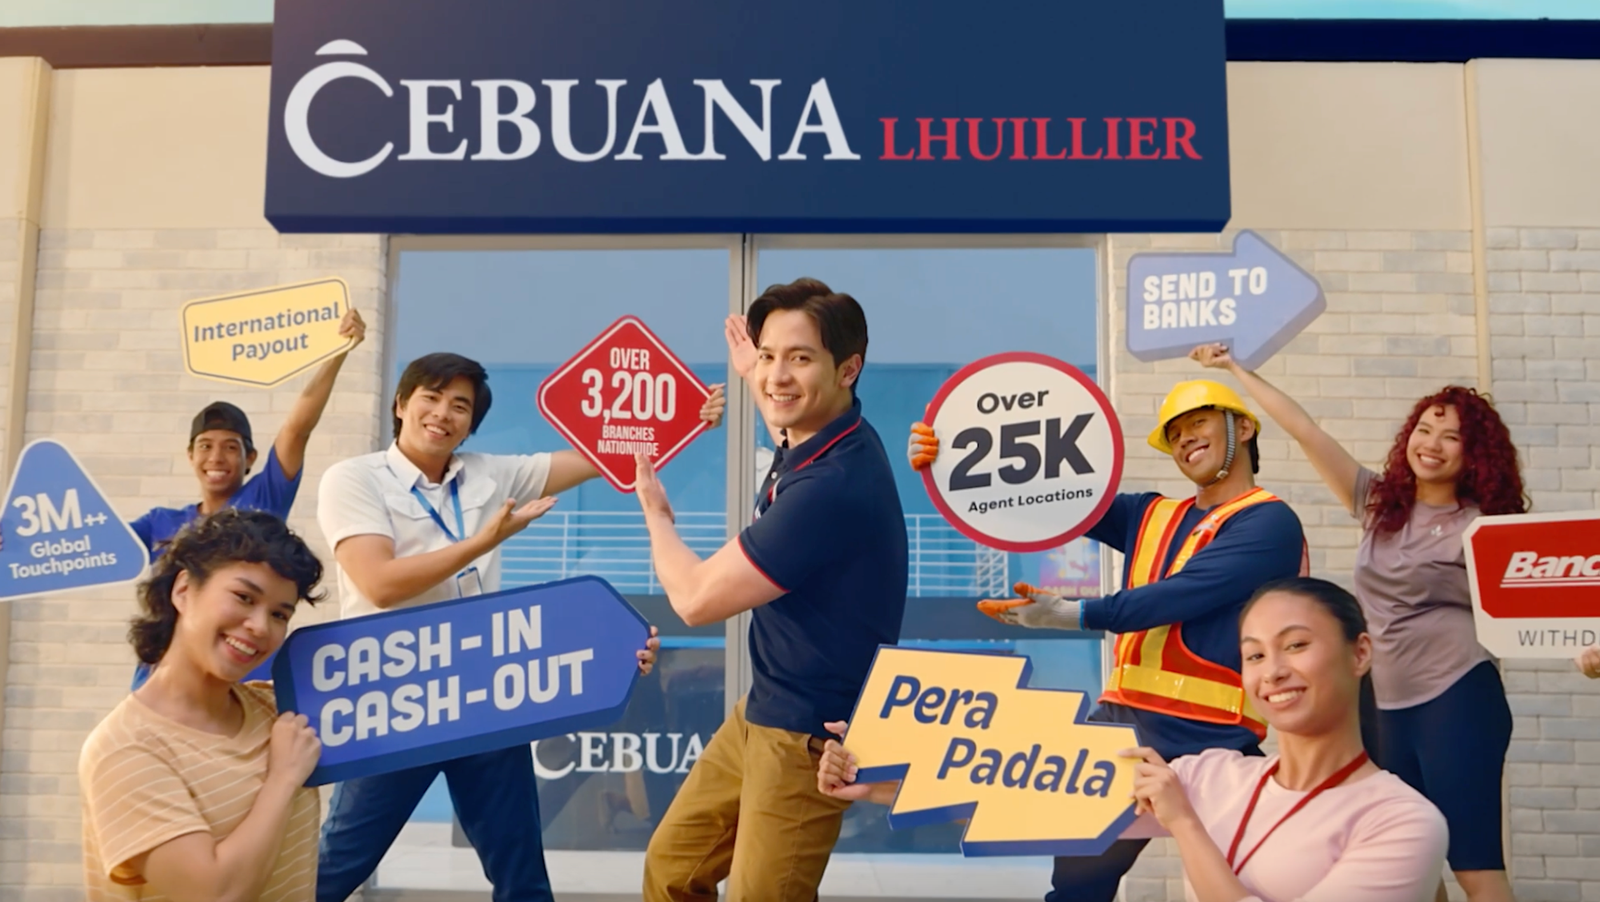 Cebuana Lhuillier Defines Money Transfer Services in So Money Ways